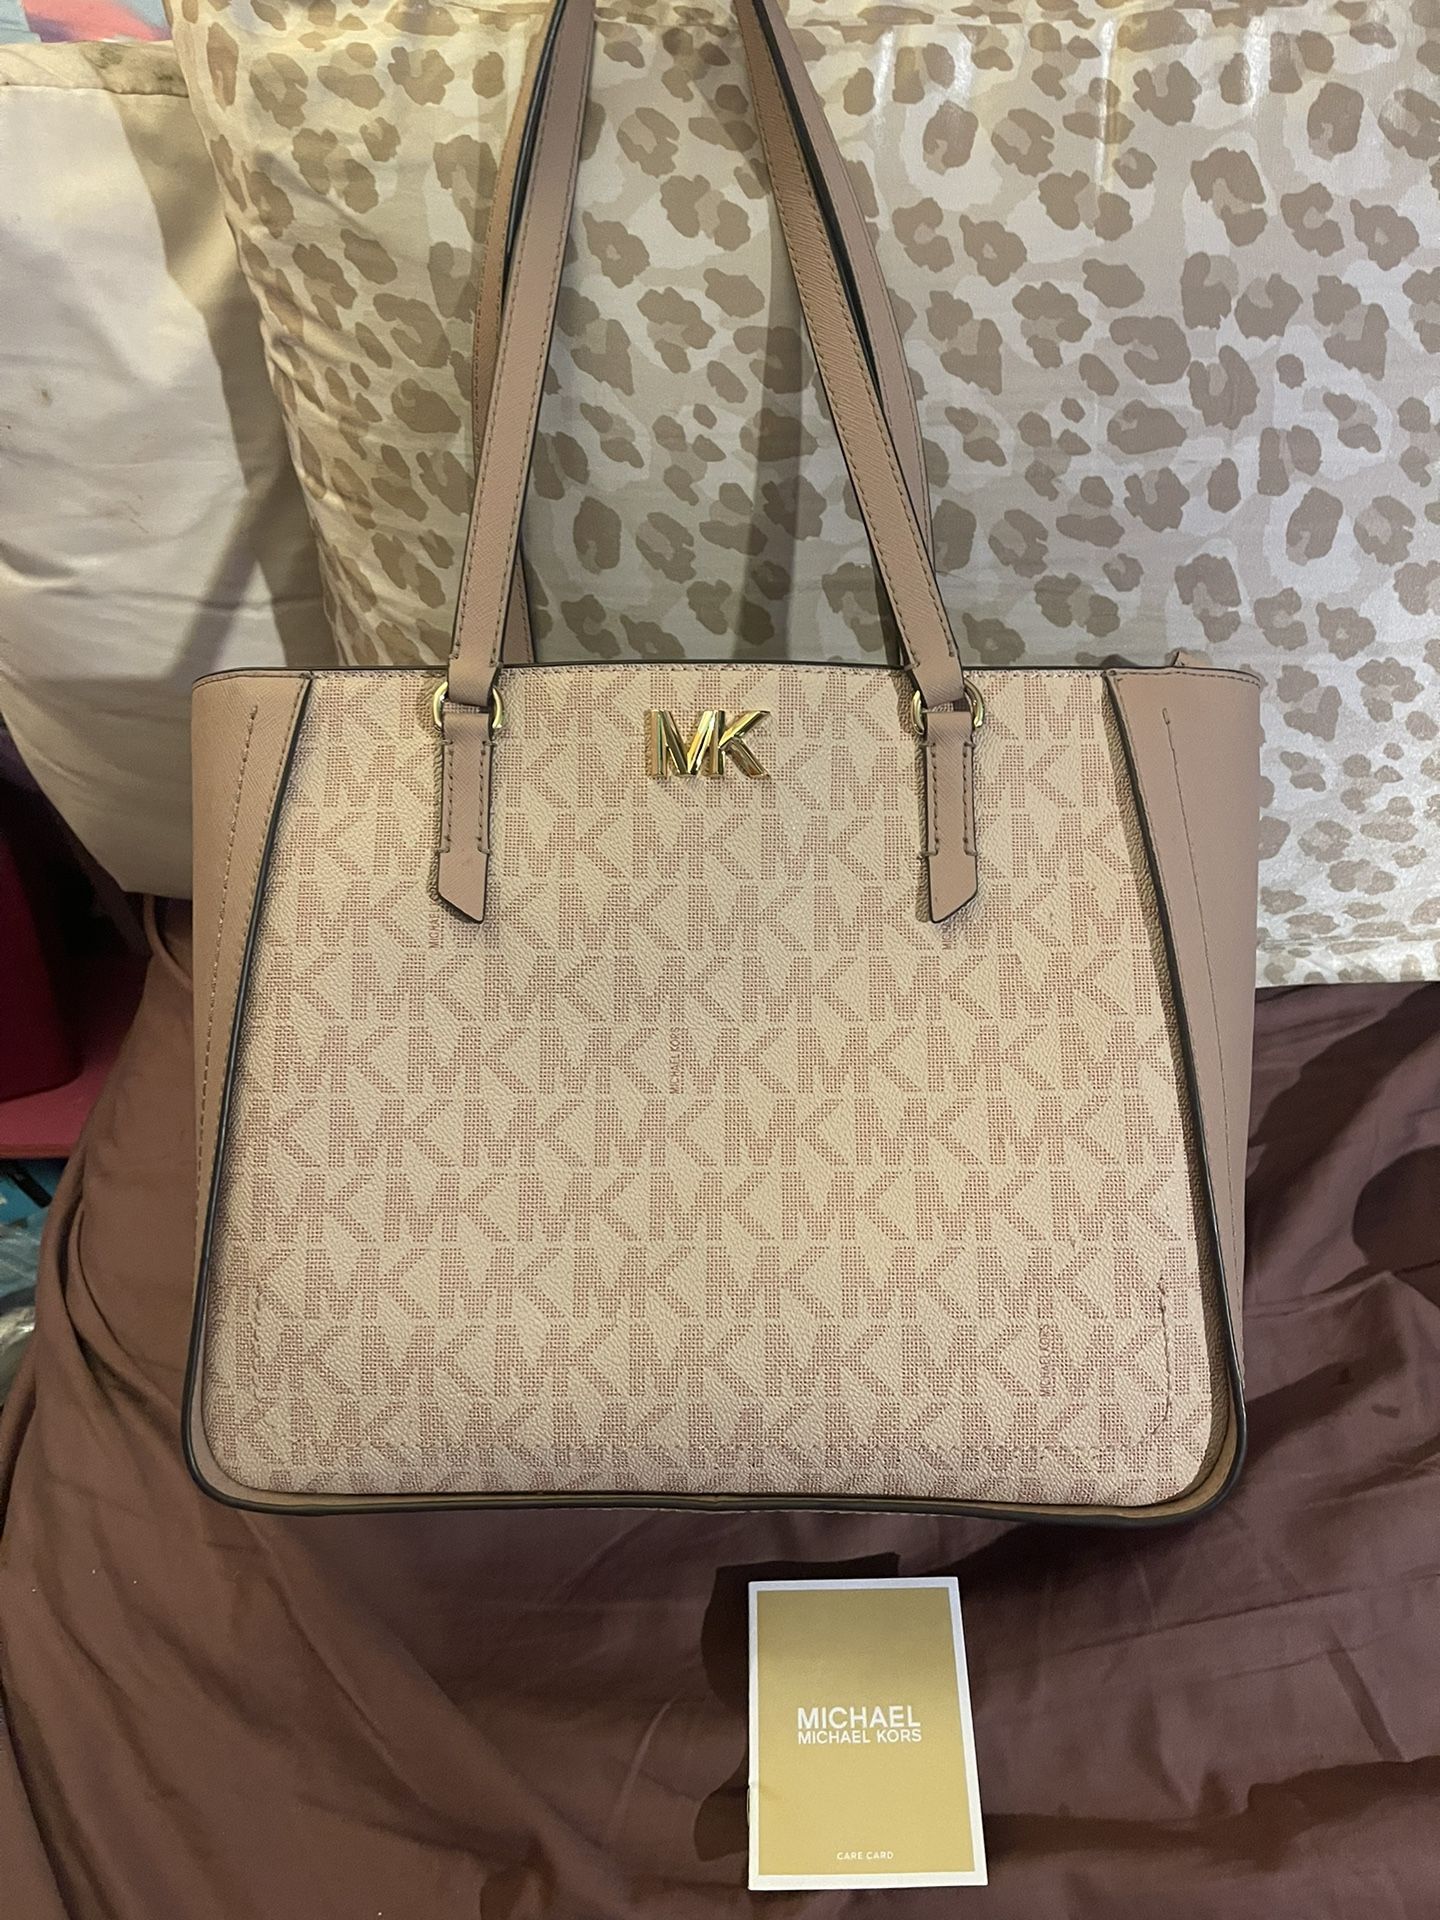 Michael Kors Handbag- Authentic New w/tags 